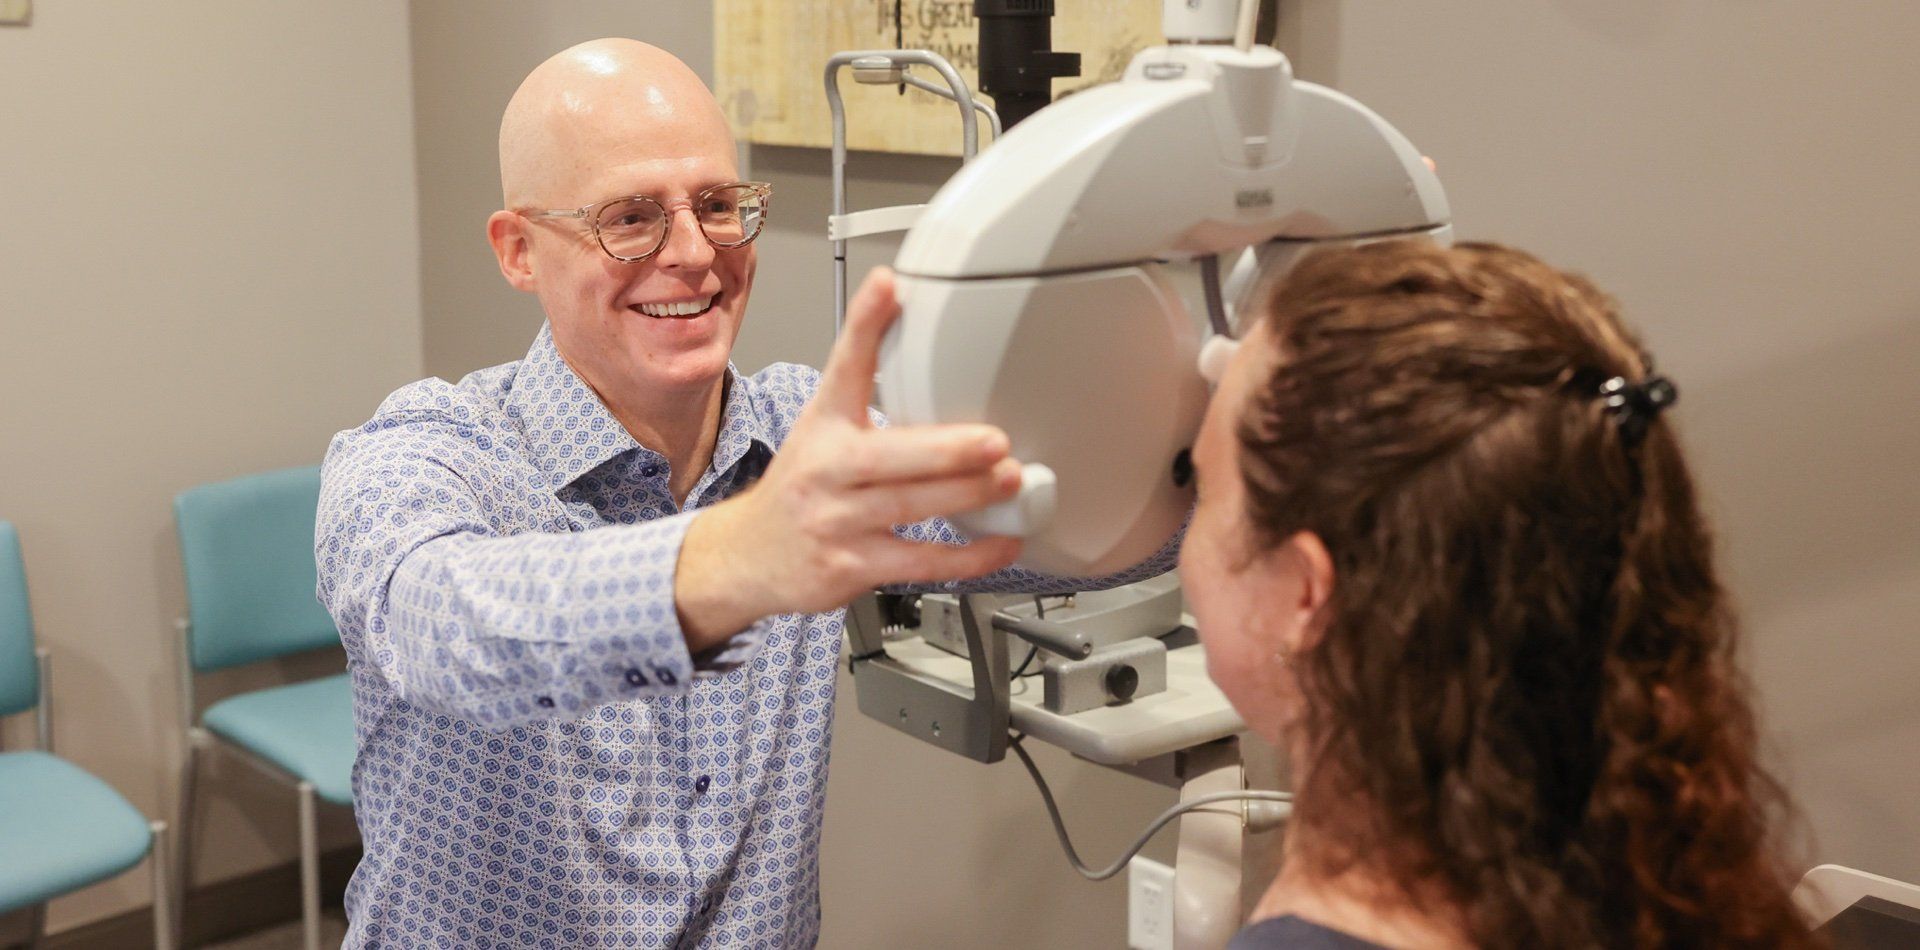 Dr. Lyons performing an eye exam